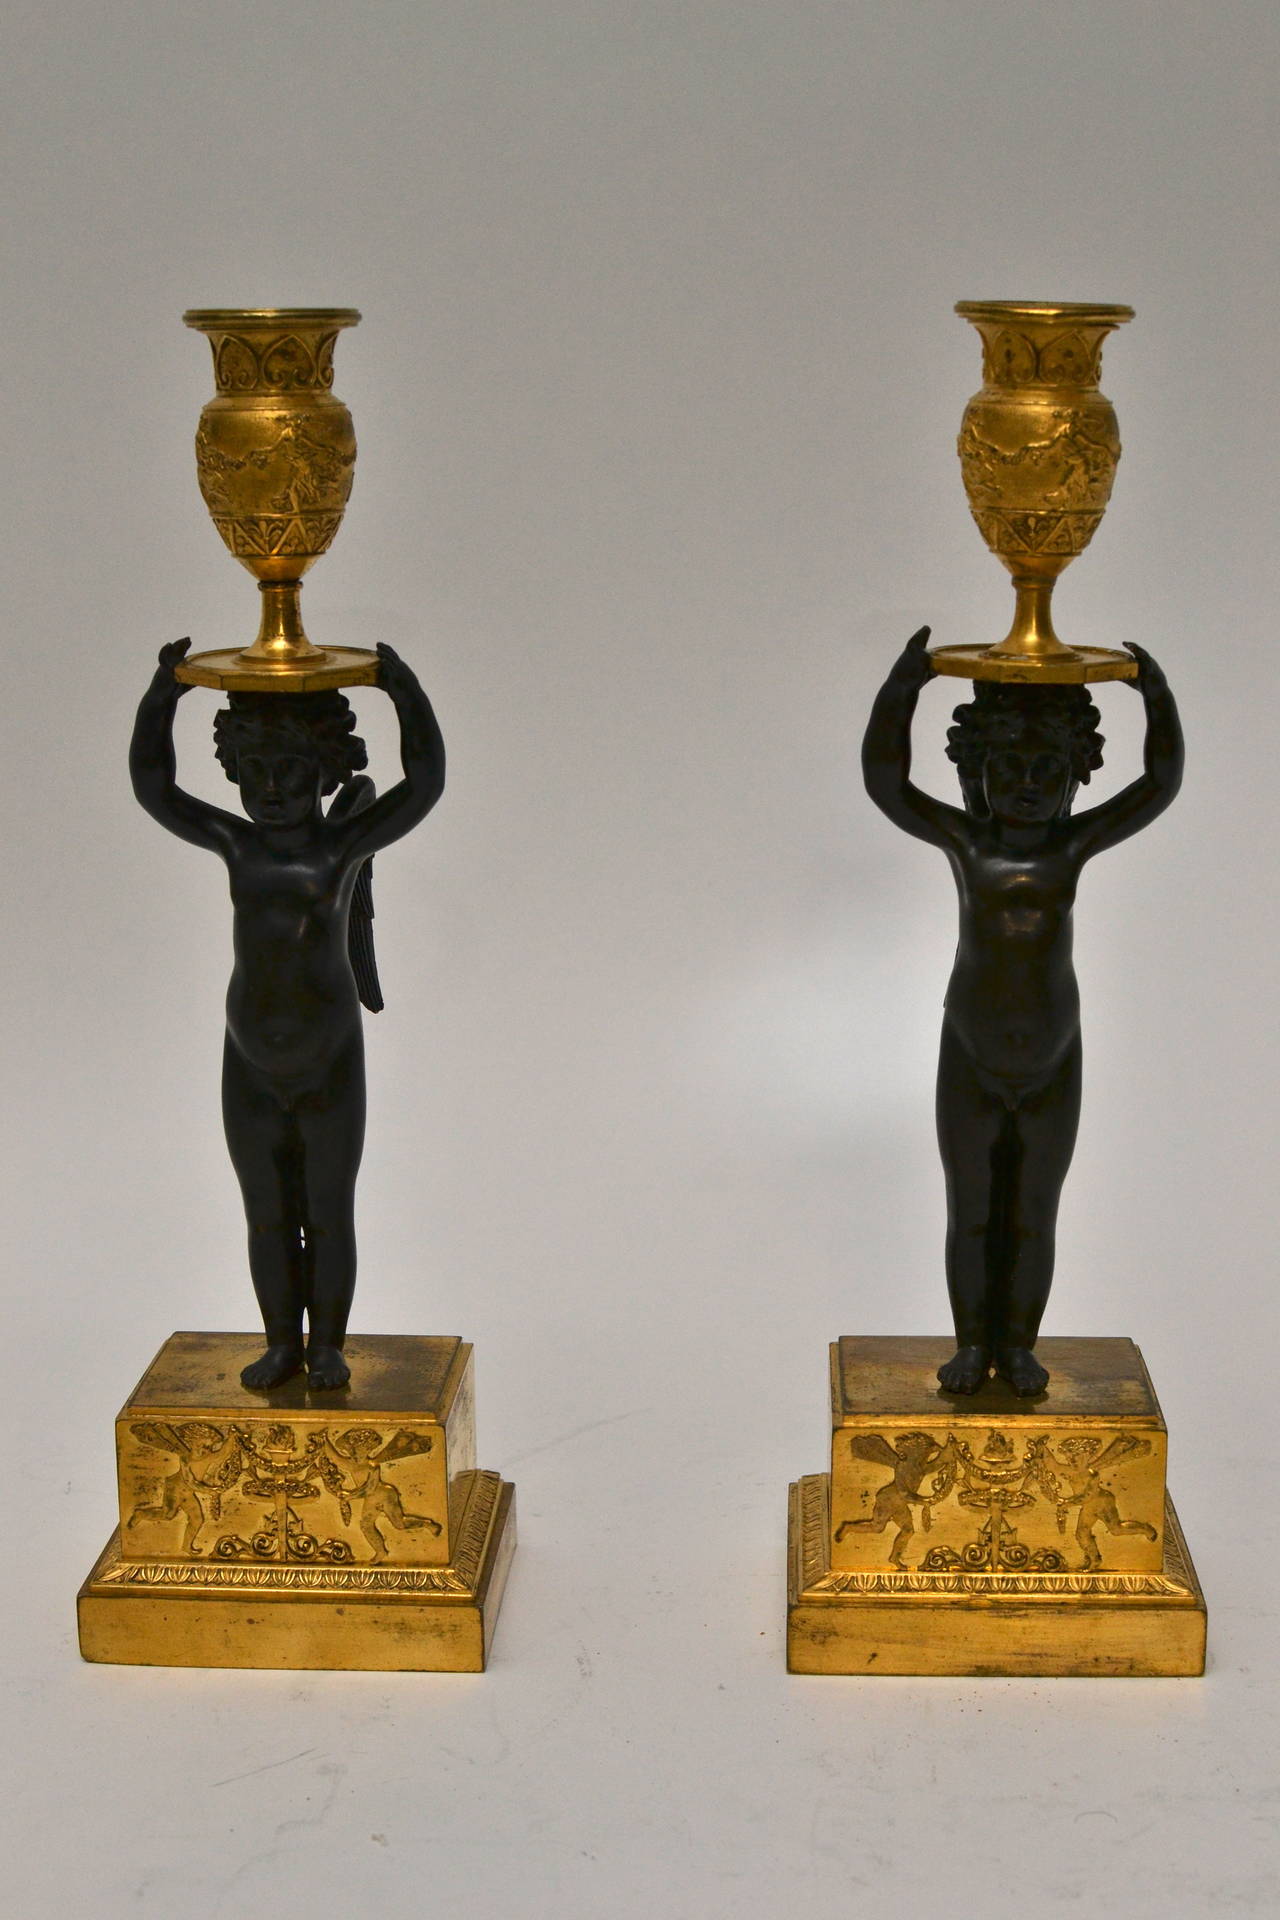 A rare pair of Russian empire gilt and patinated bronze candle sticks, circa 1810.